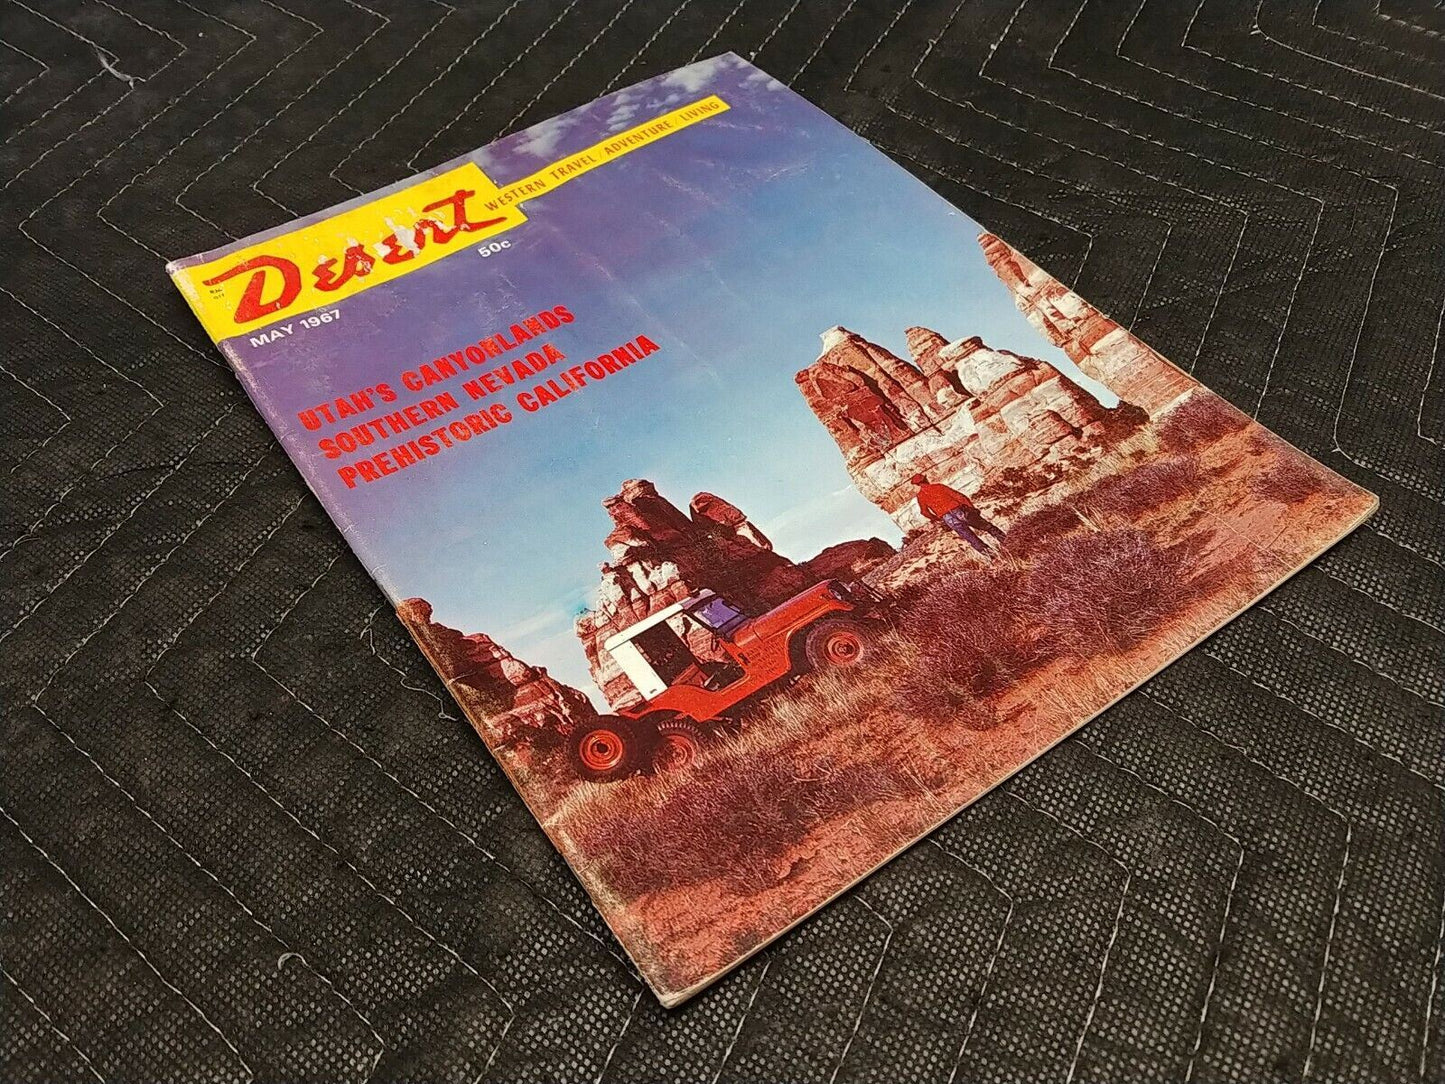 Vintage Desert Magazine May 1967